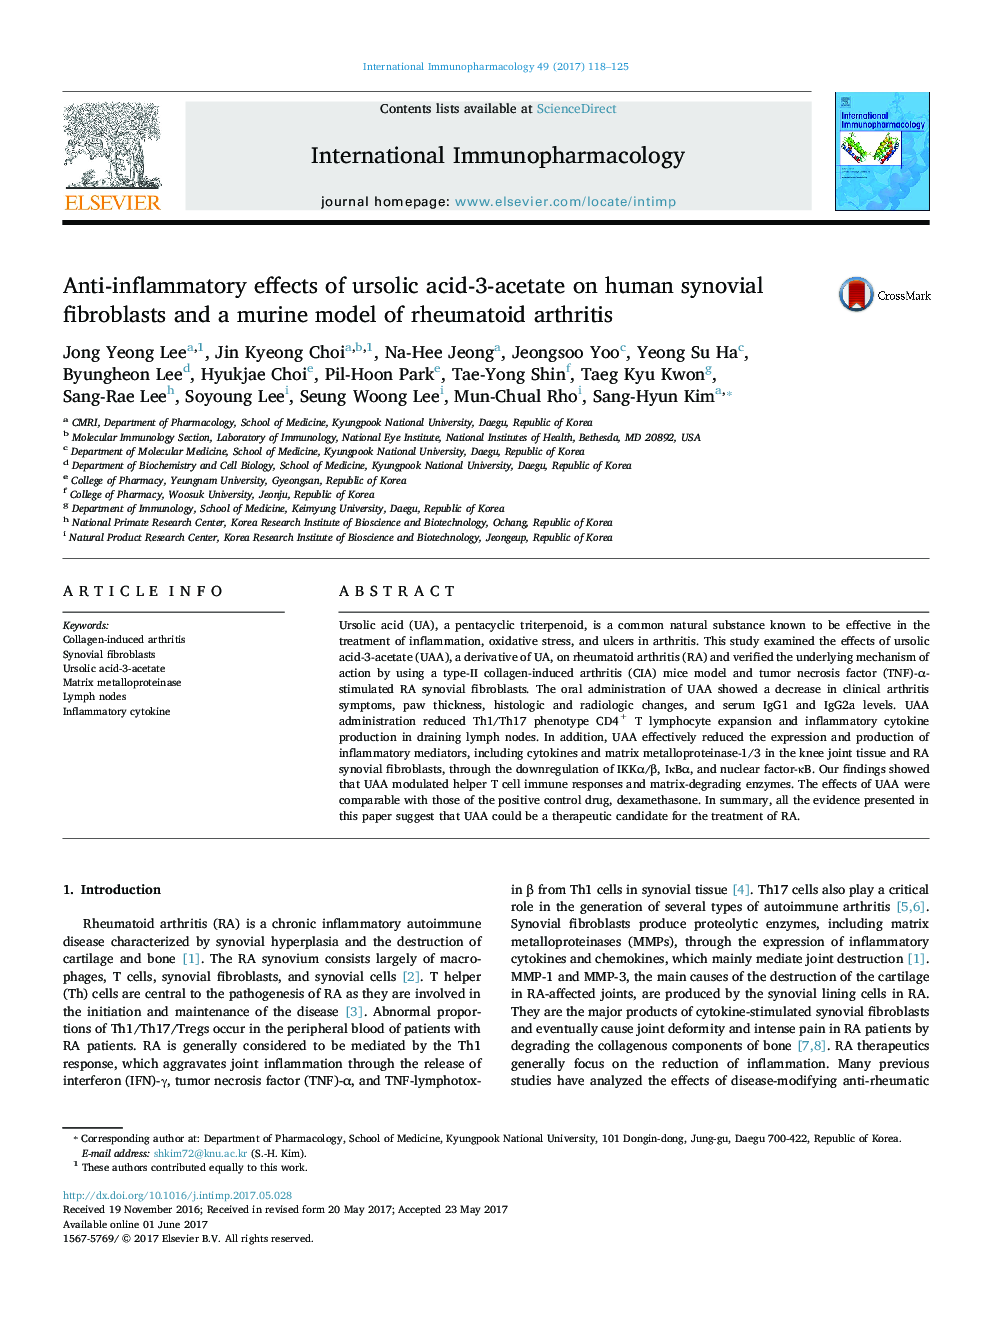 Anti-inflammatory effects of ursolic acid-3-acetate on human synovial fibroblasts and a murine model of rheumatoid arthritis